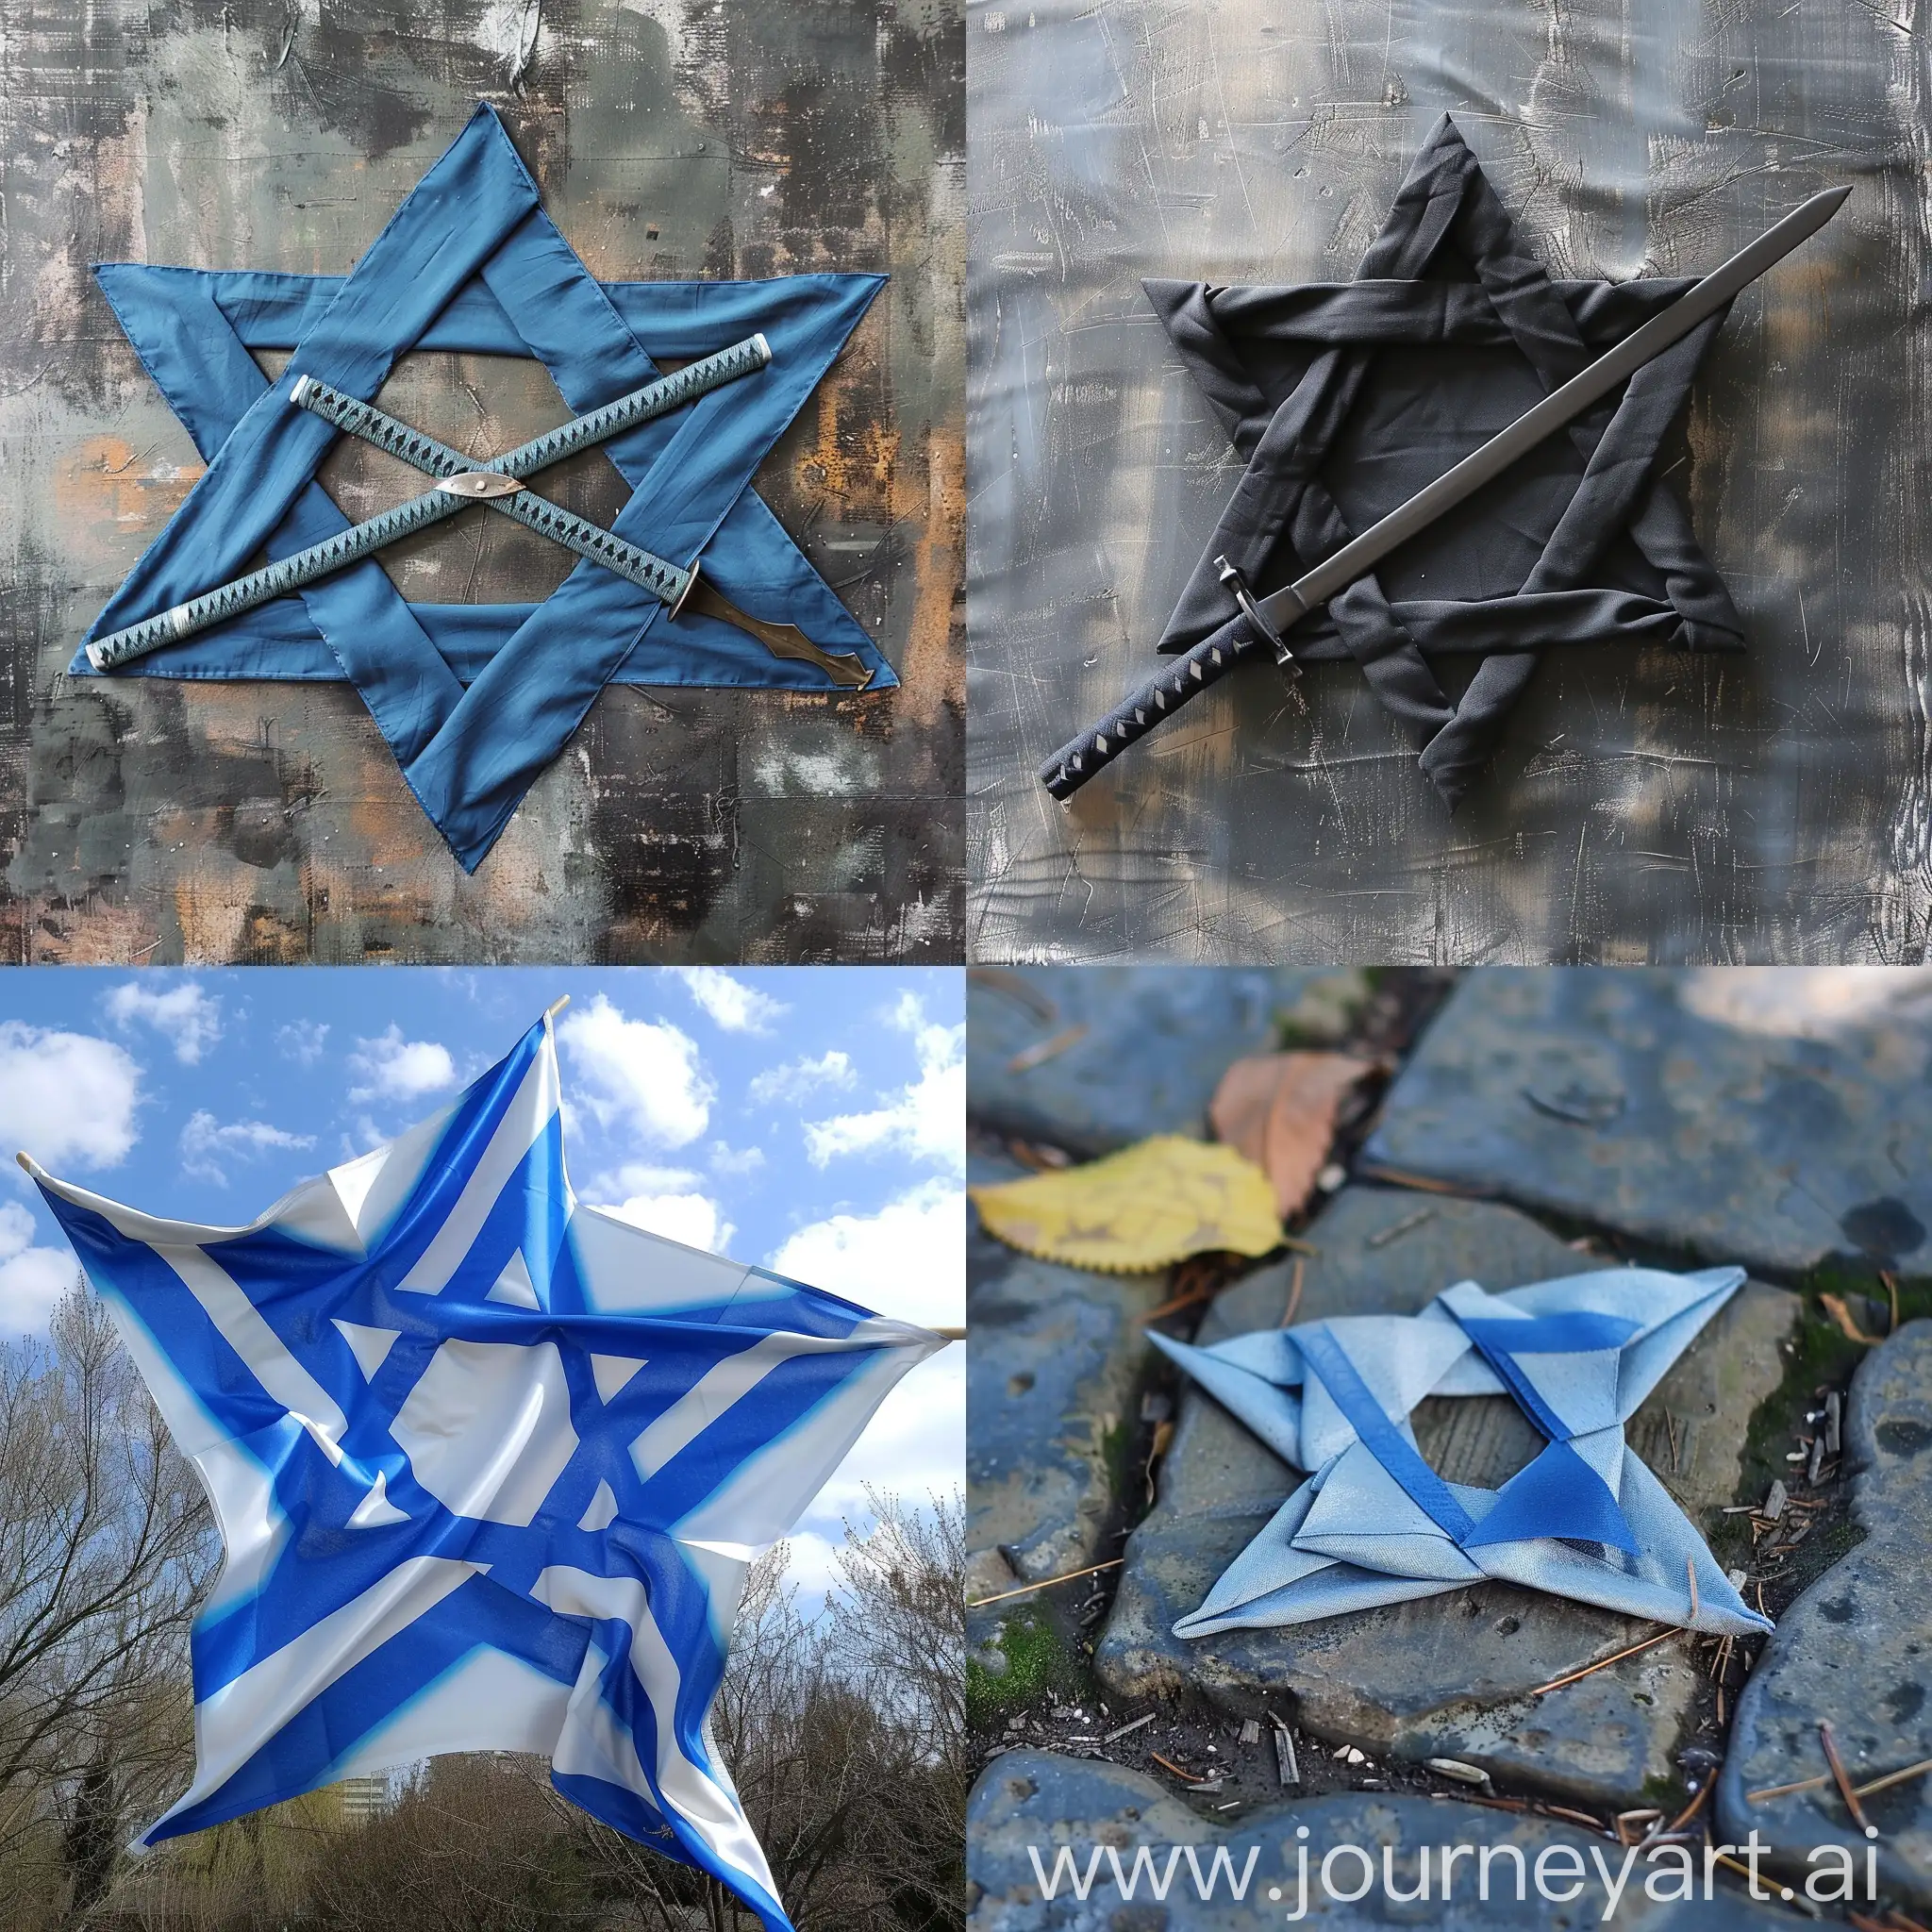 Make the israelian star flag like a ninja star